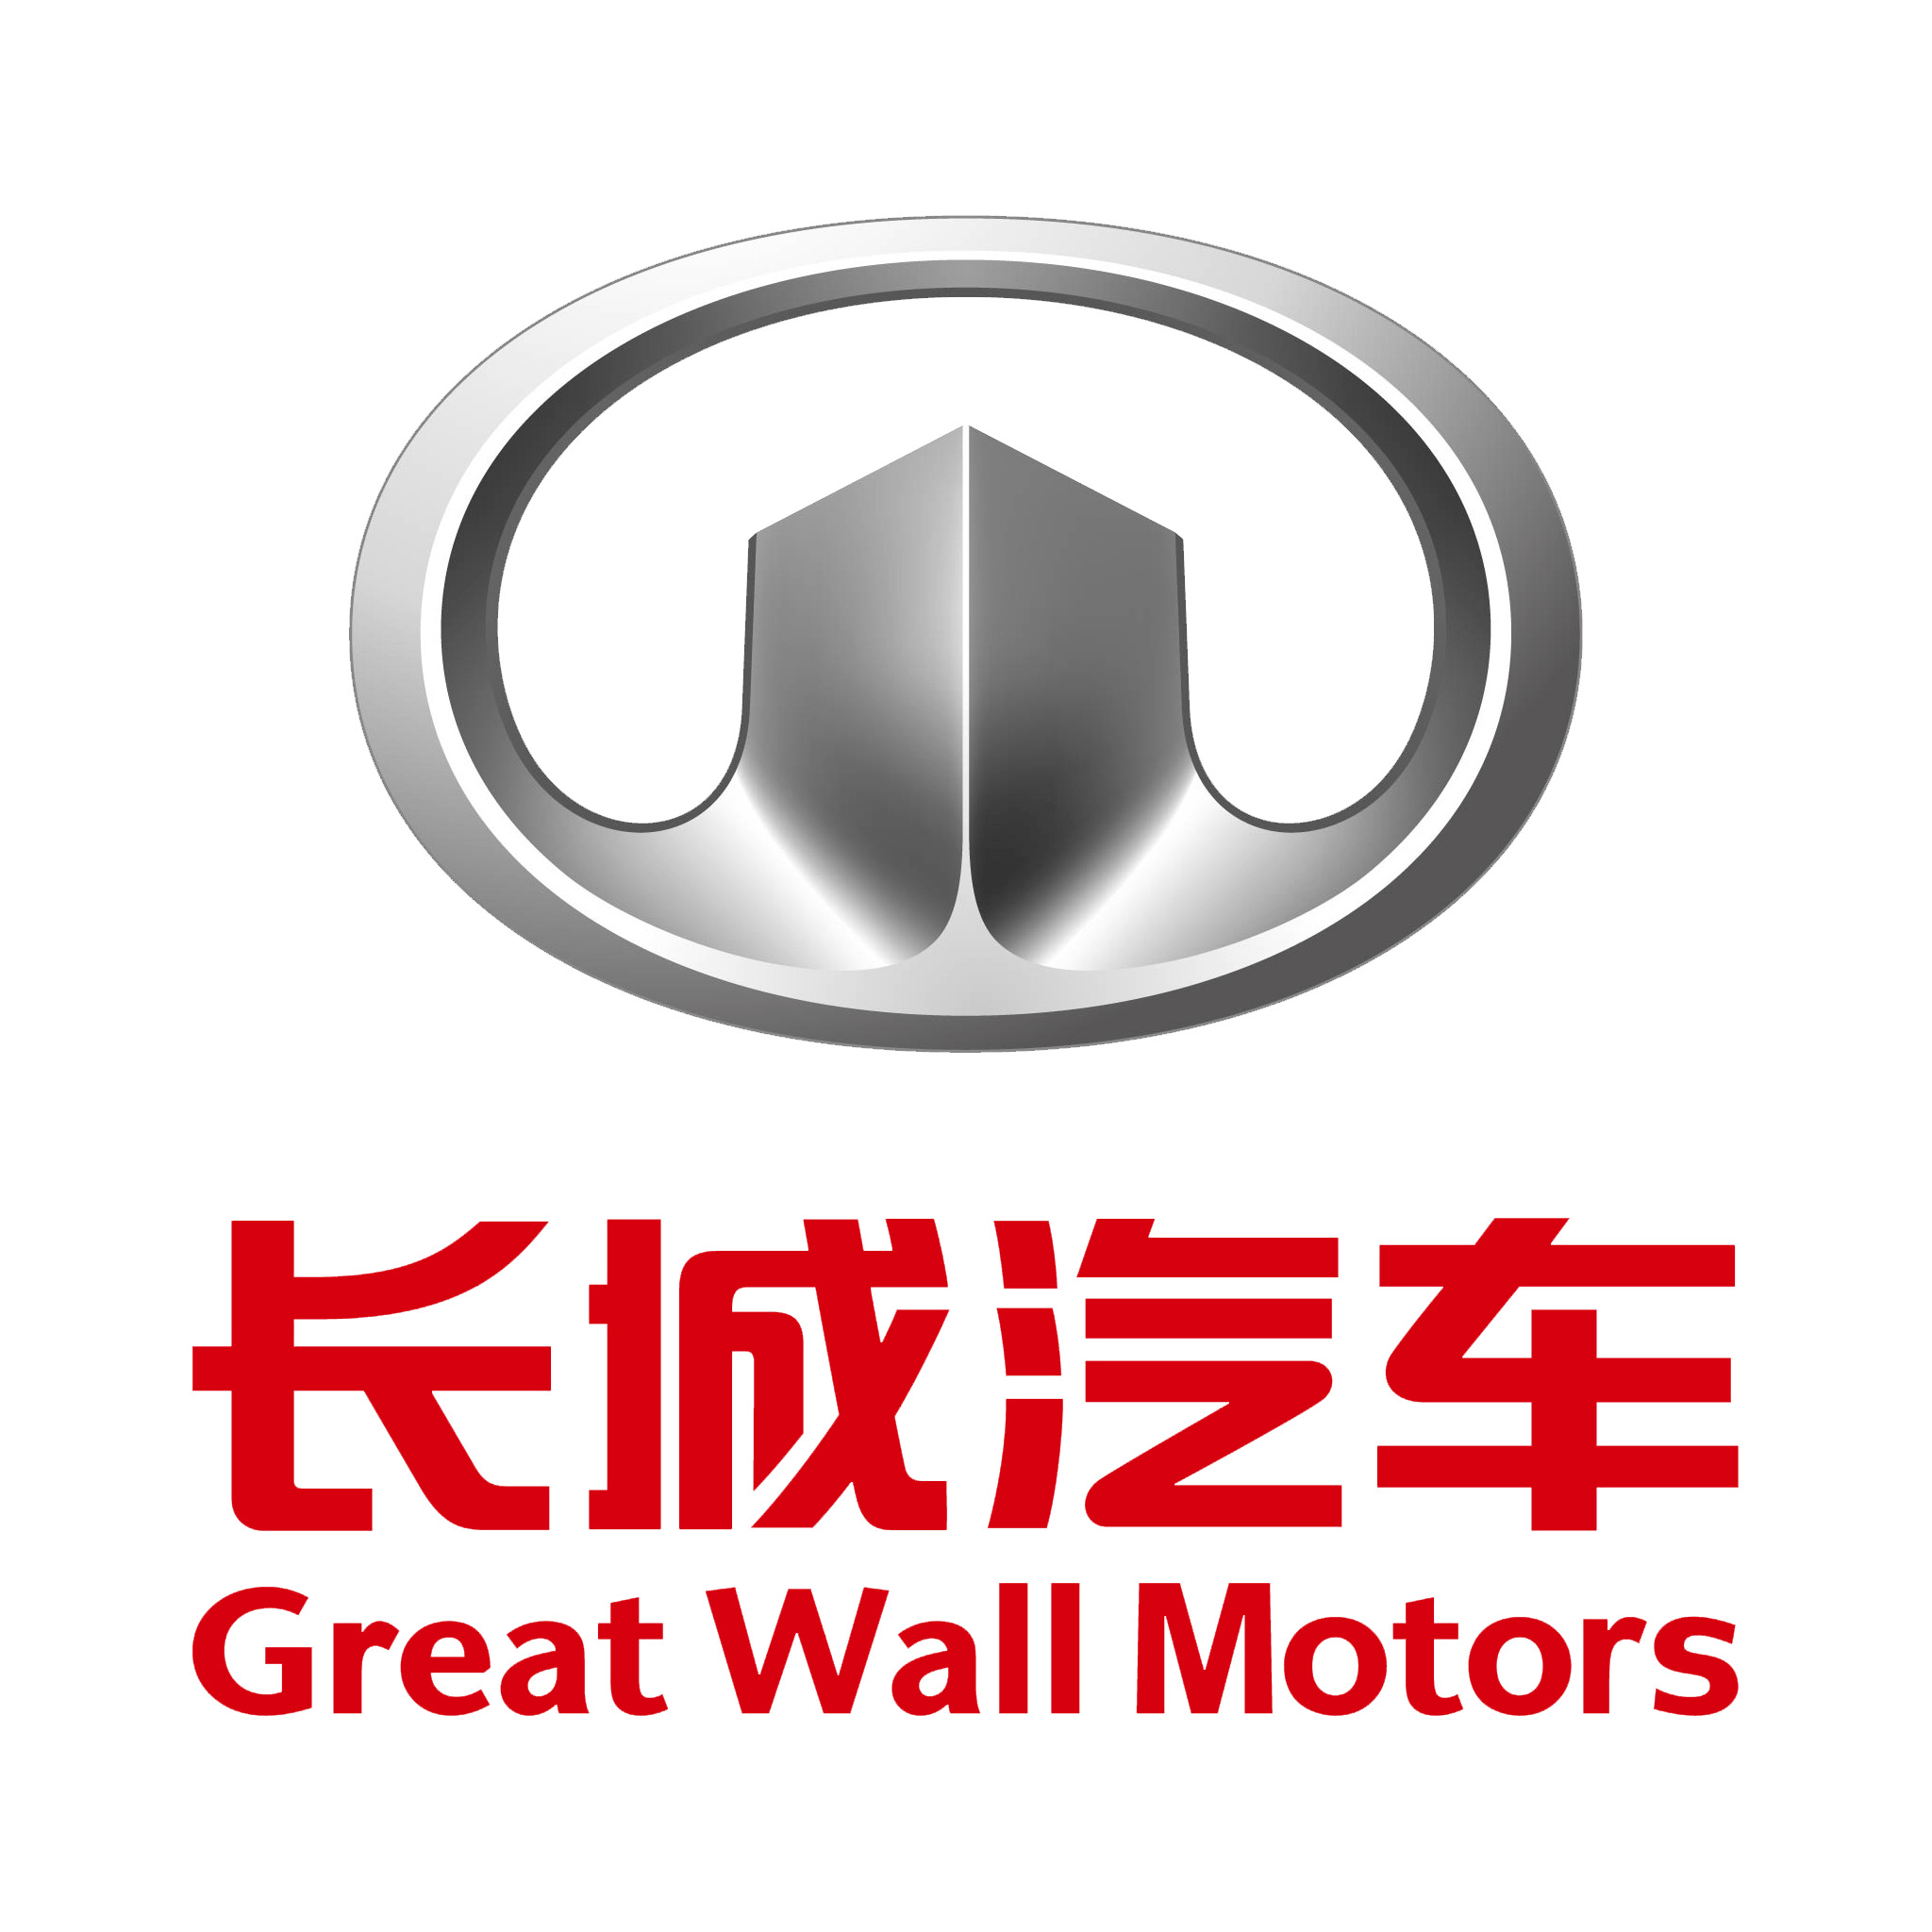 Car Logo Great Wall icons